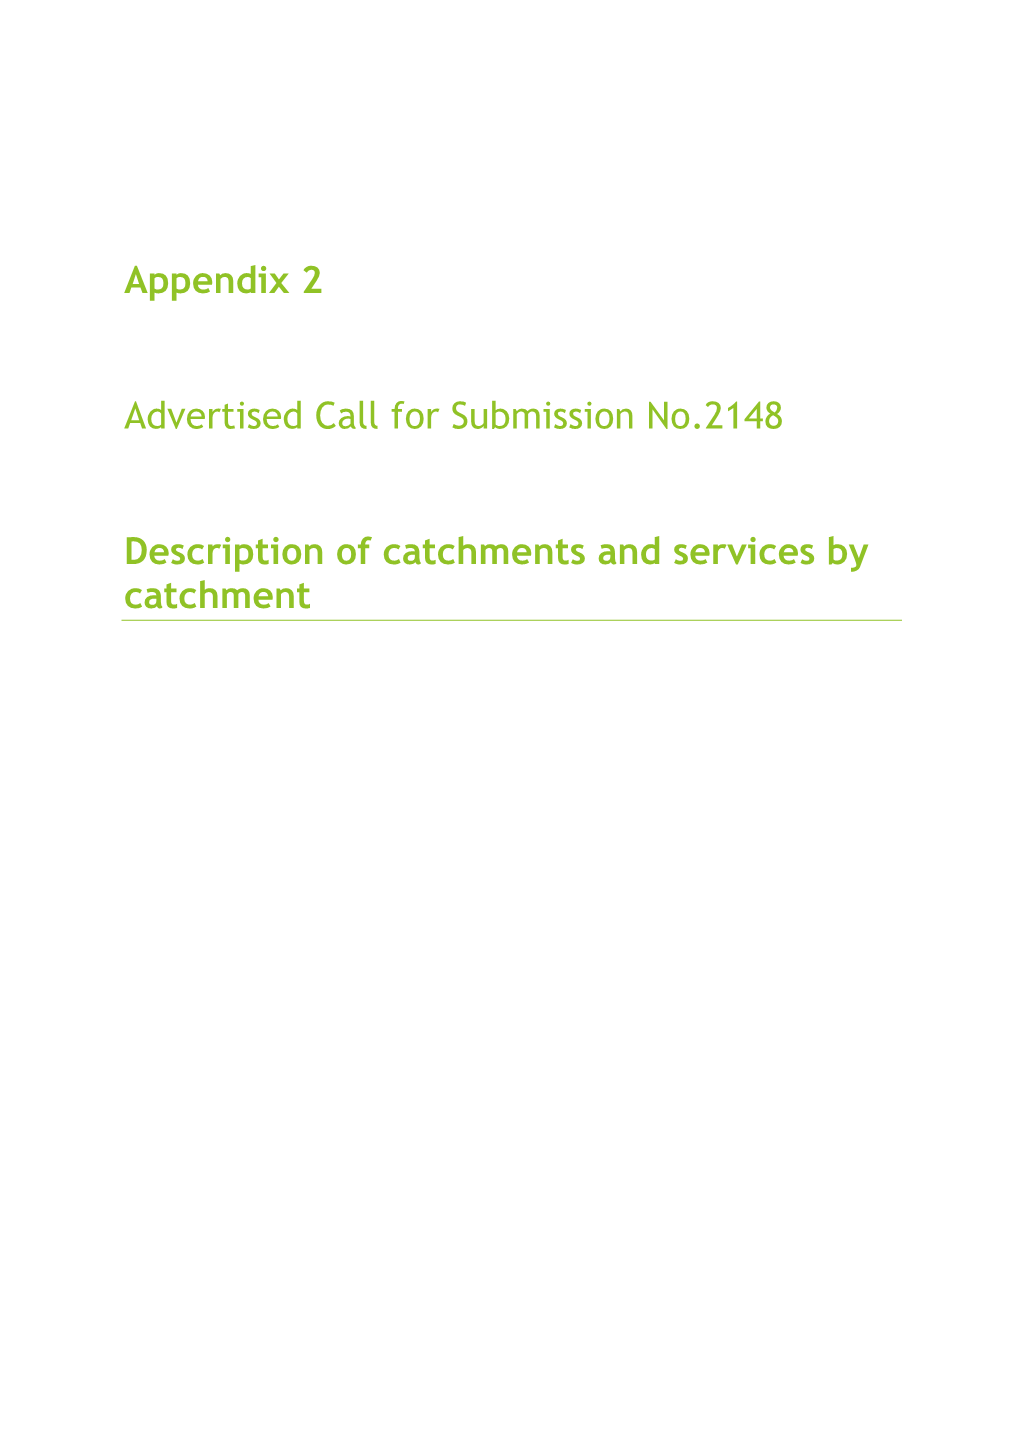 2148 MHCSS Appendix 2 Description of Catchments and Services By